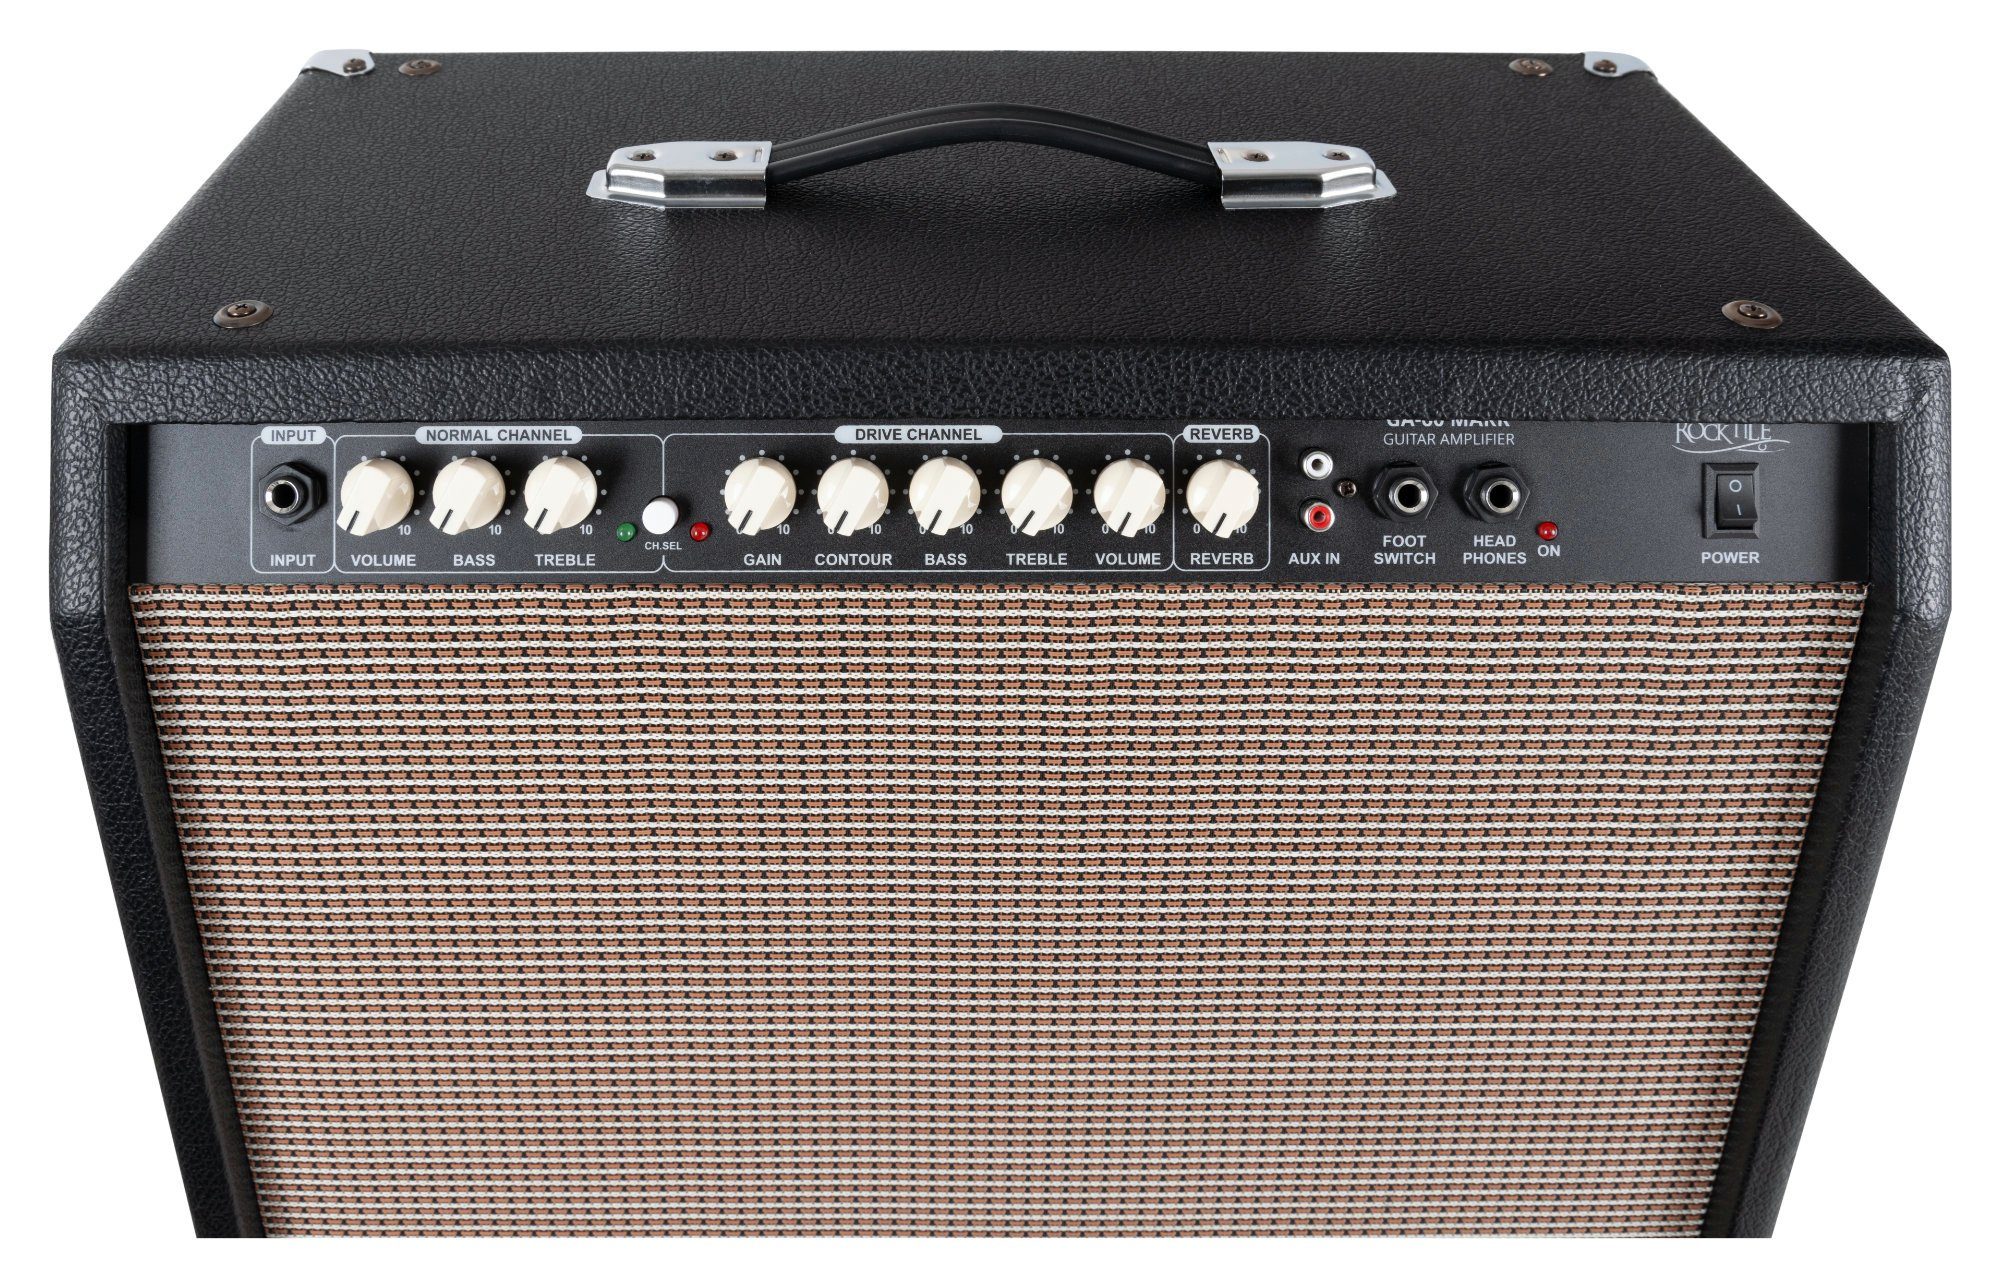 Rocktile GA-60 Mark Gitarrenverstärker Verstärker 2-Band-EQ (Normal/Drive), Gitarrencombo - 60 pro Mit Kanal Effektweg) - Federhall-Effekt Kanäle: (Anzahl & W, 2